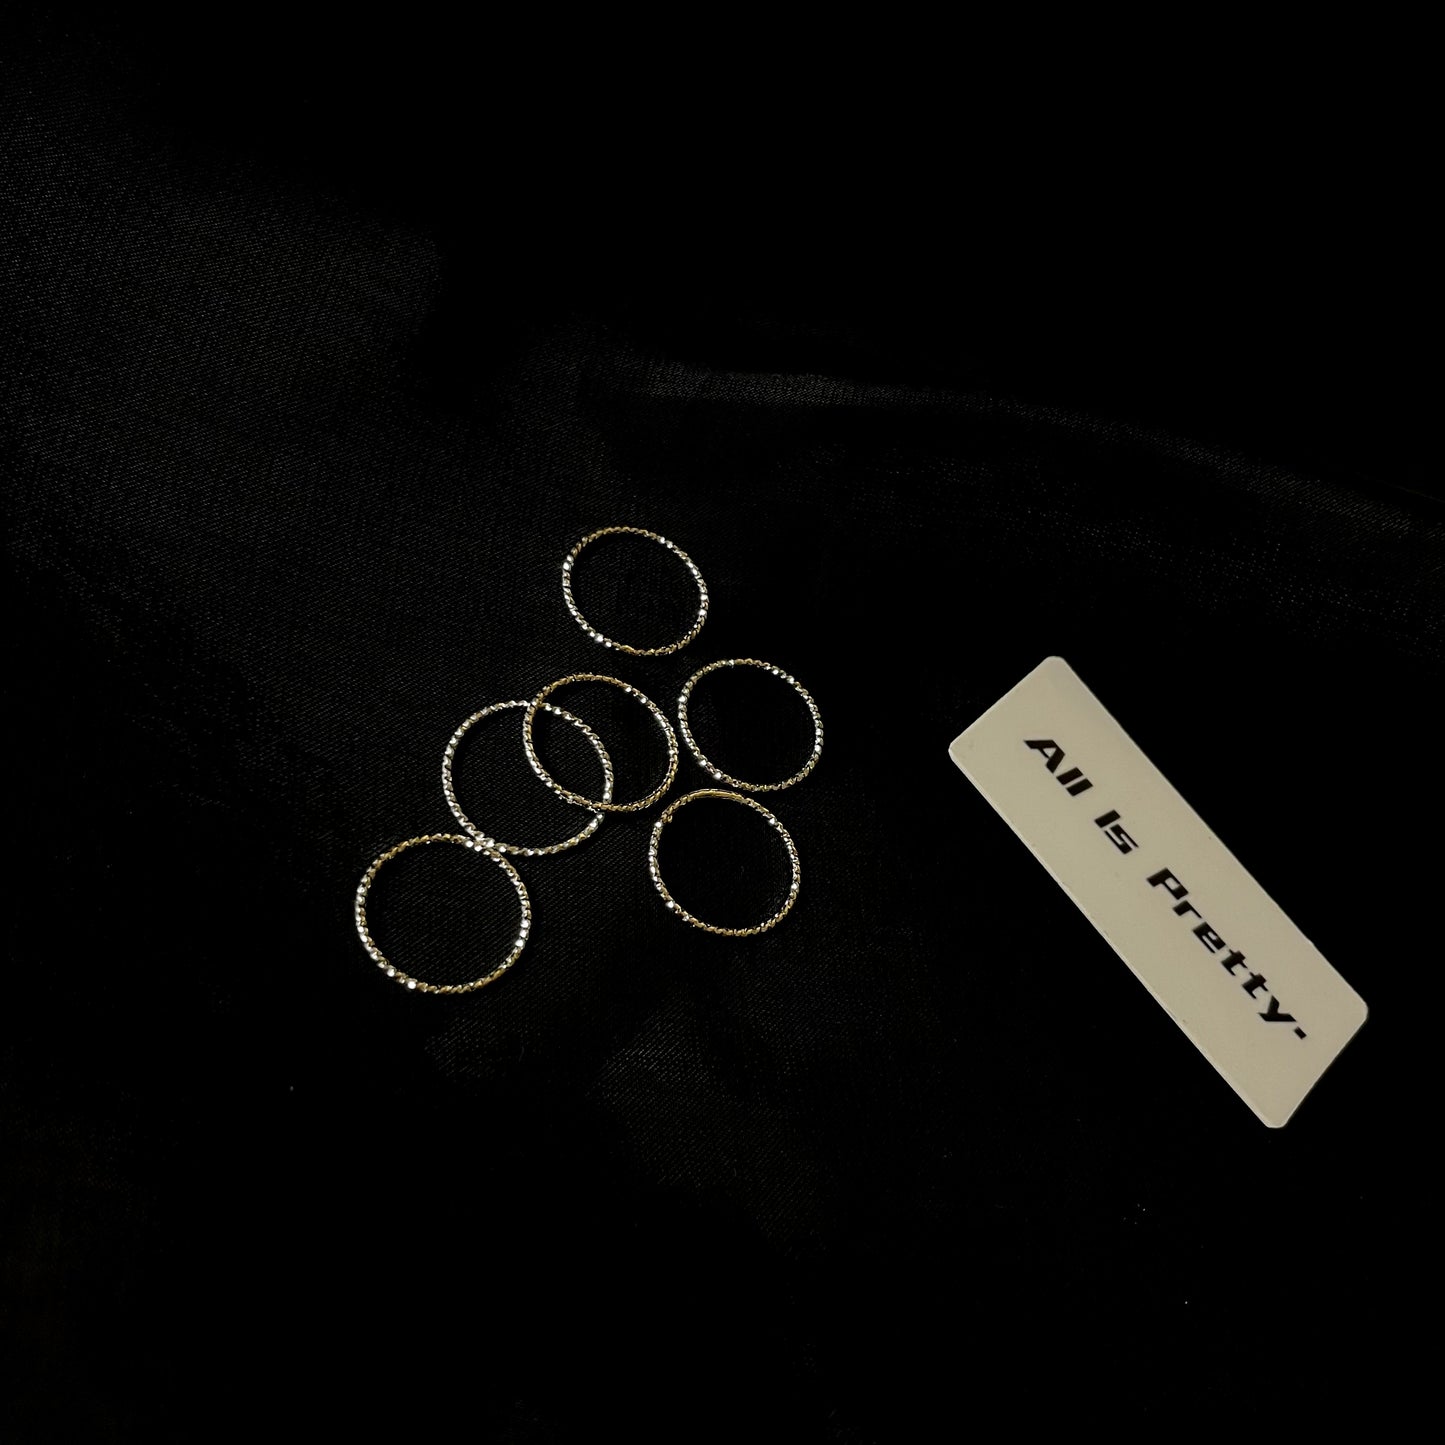 Tiny thin silver ring/tail ring